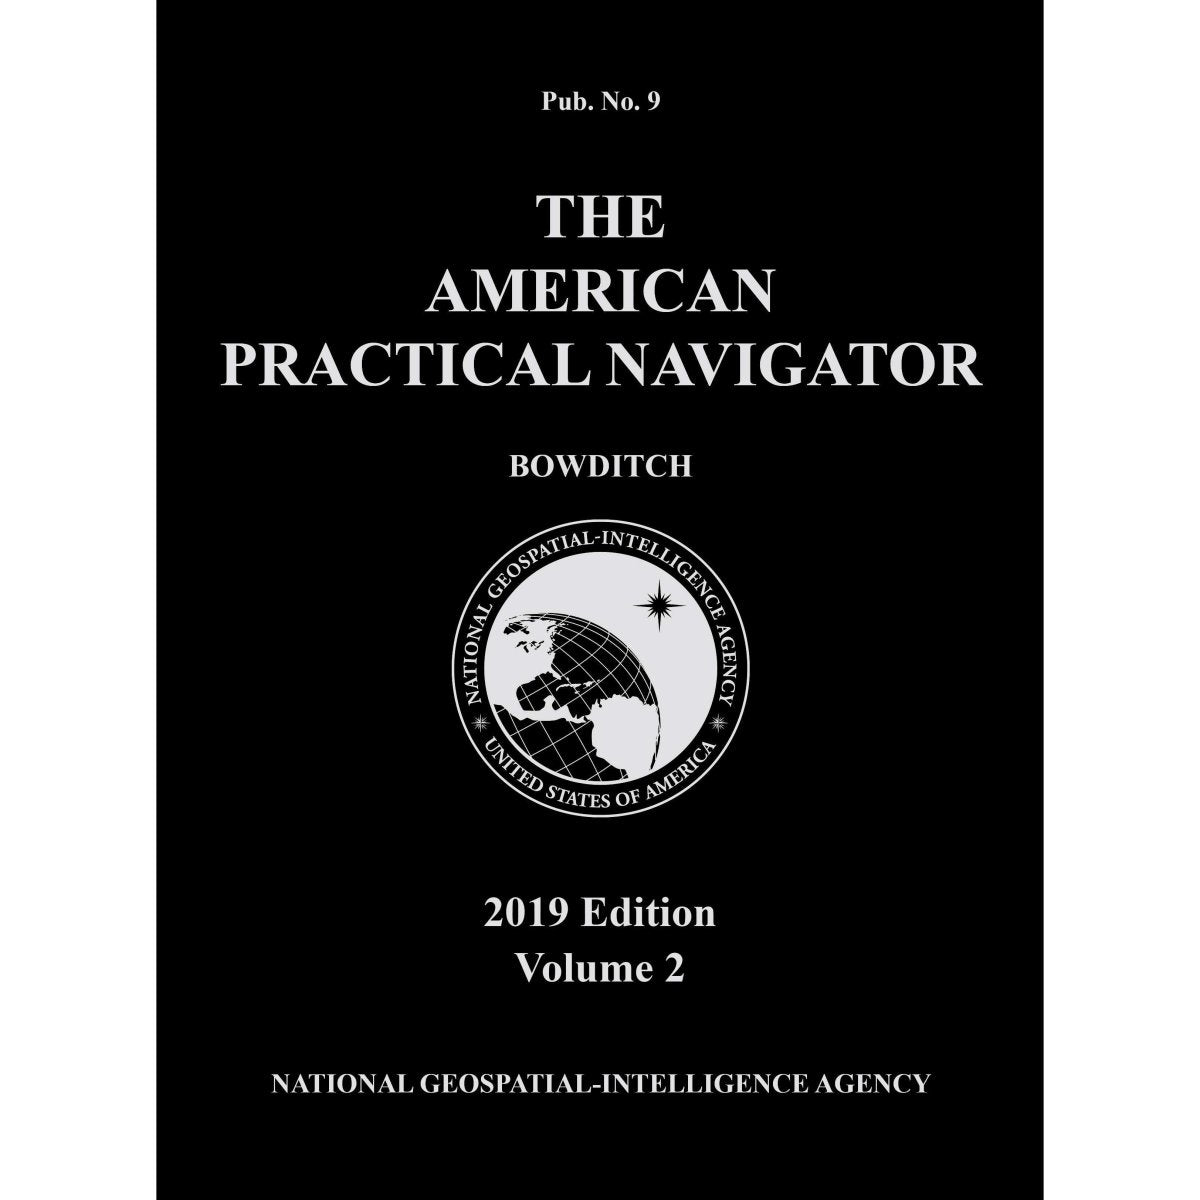 American Practical Navigator "Bowditch" 2019 Vol. 2 Paperback - Life Raft Professionals